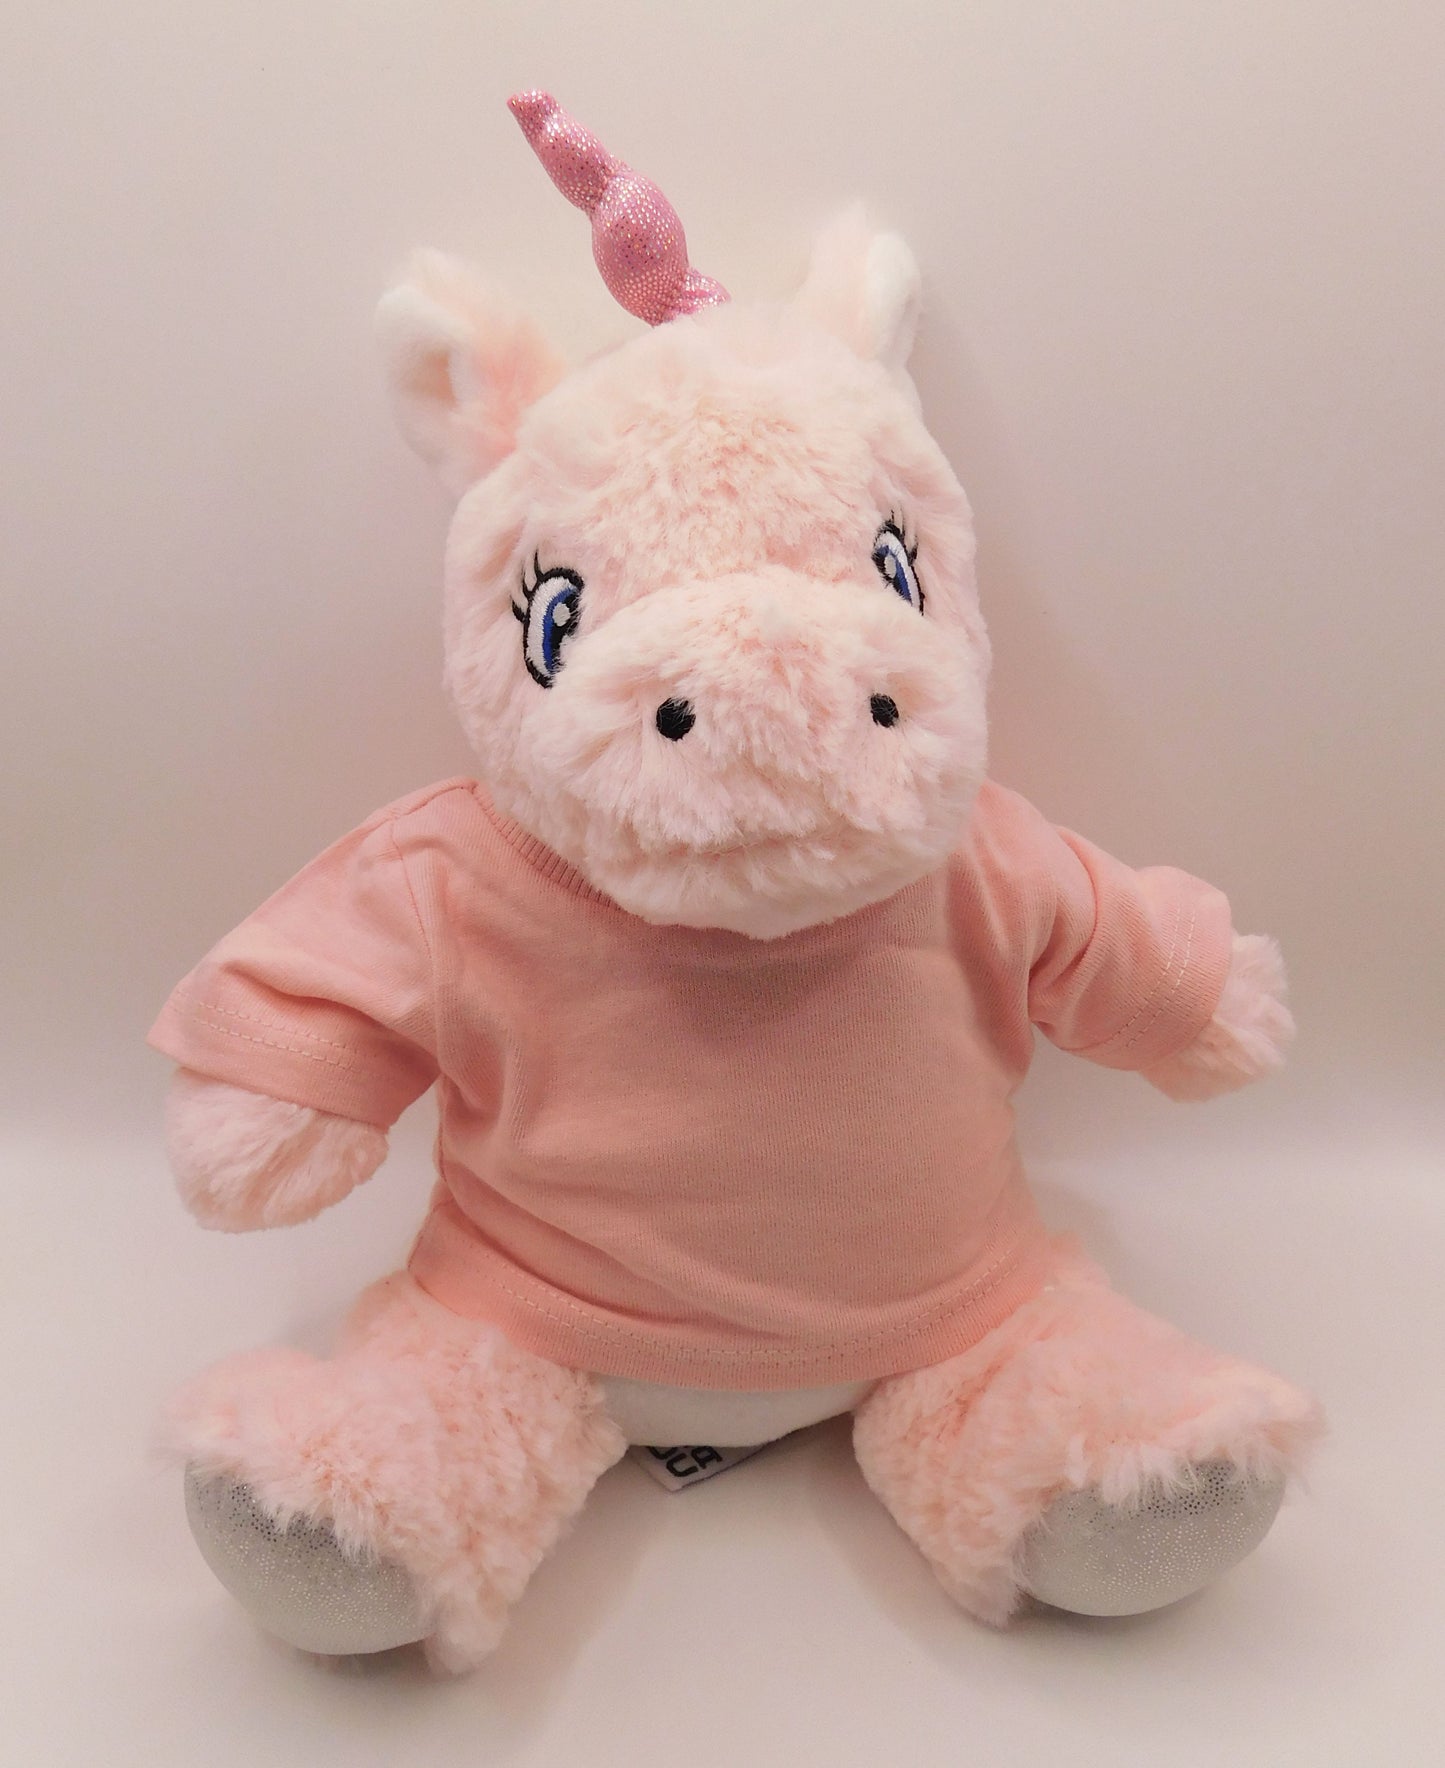 Dress your own 'Mumbles' Unicorn/ Teddy Bear/ Christmas Gifts/ Birthday/ Gift/ Unicorn